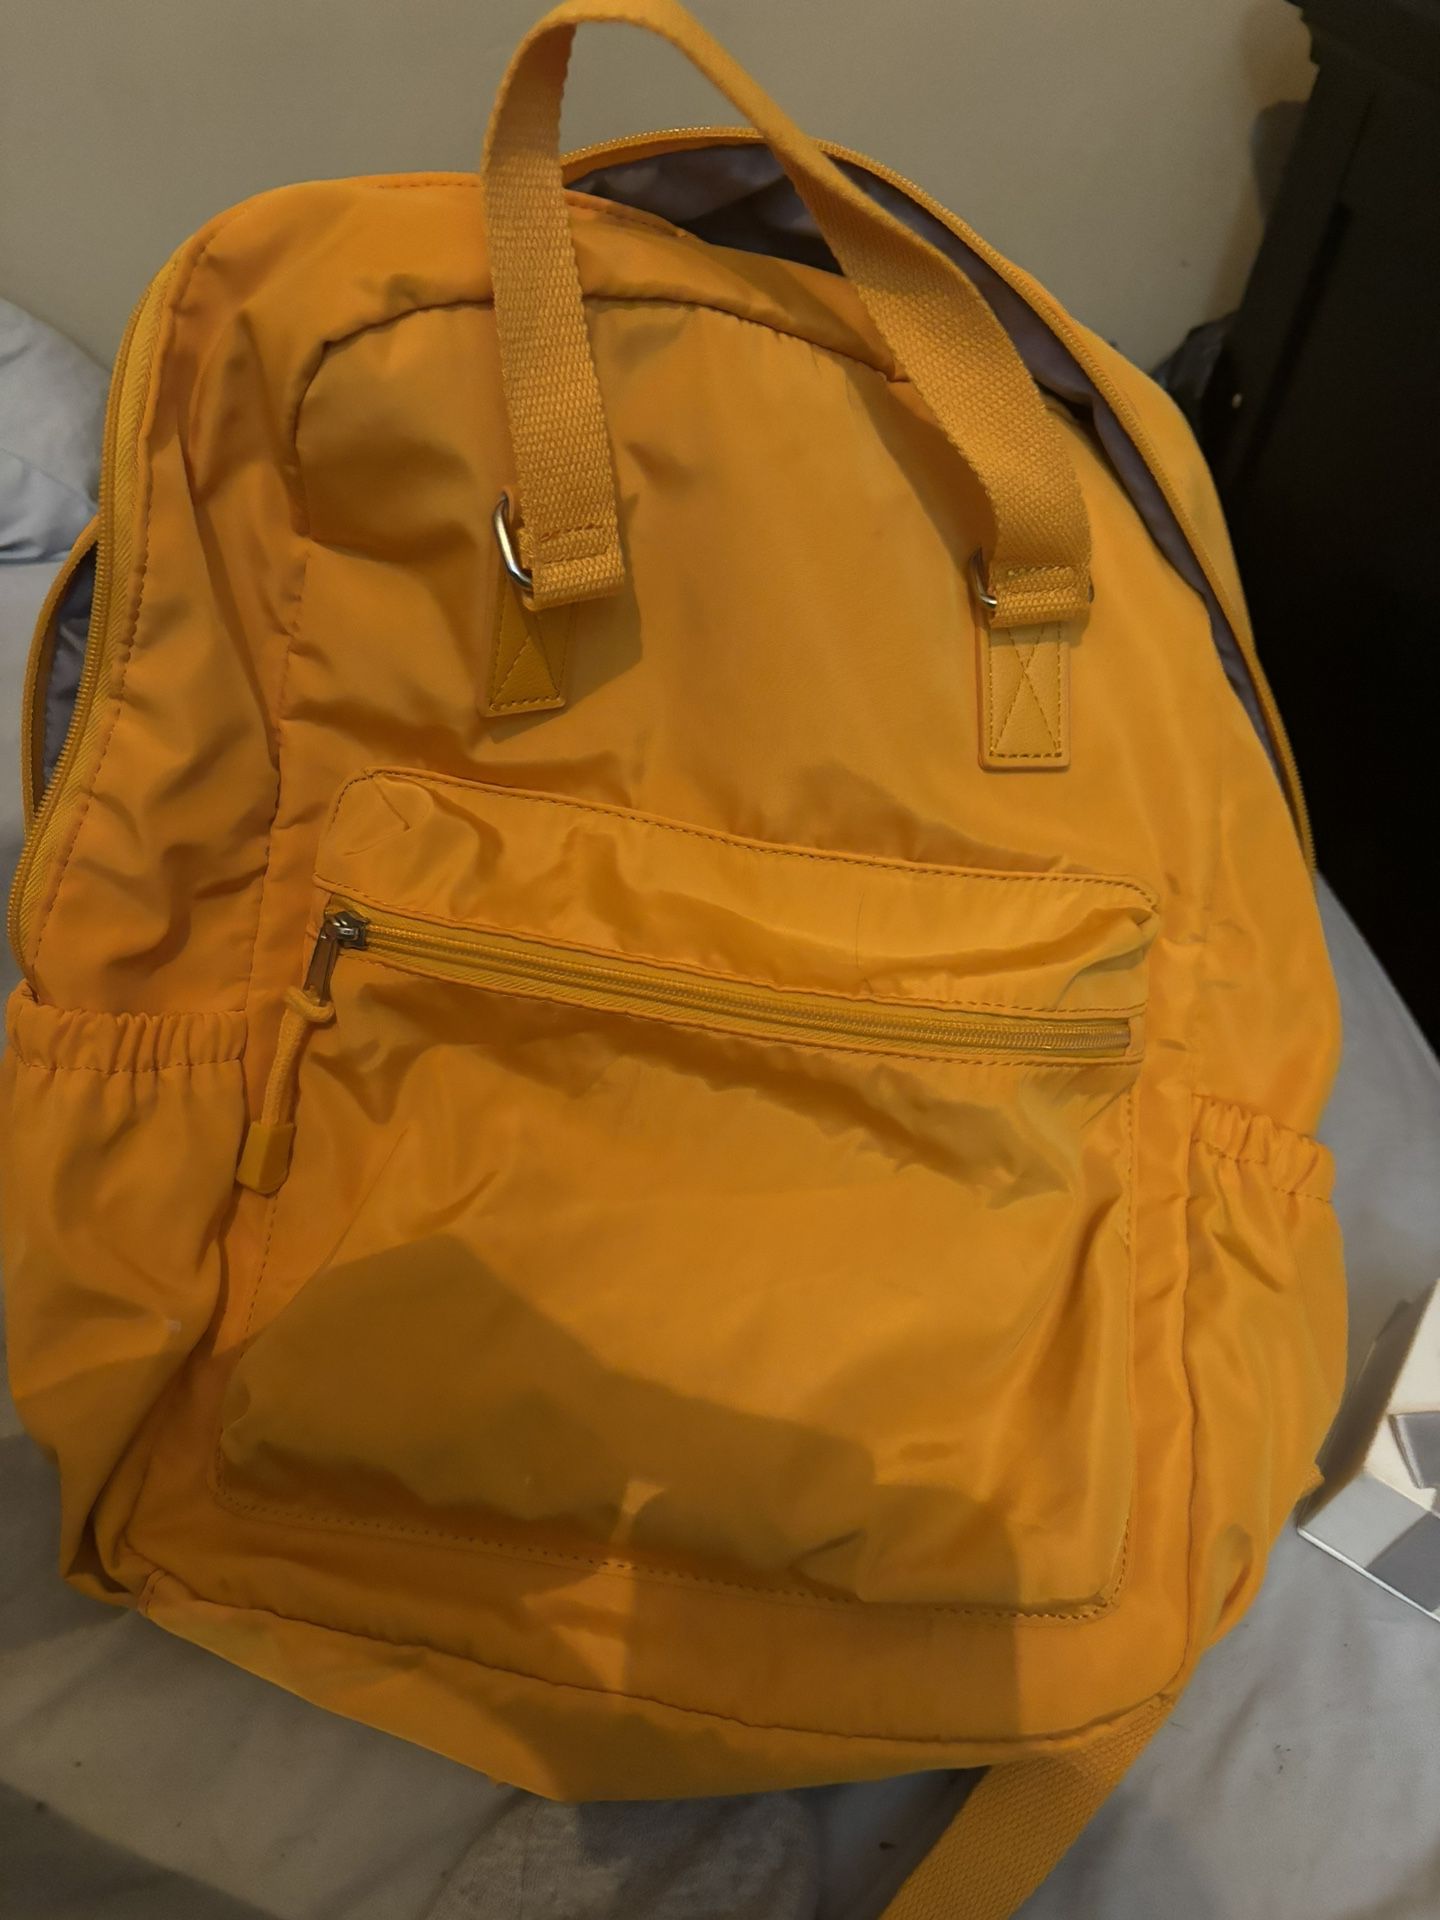 Backpack Brand New 